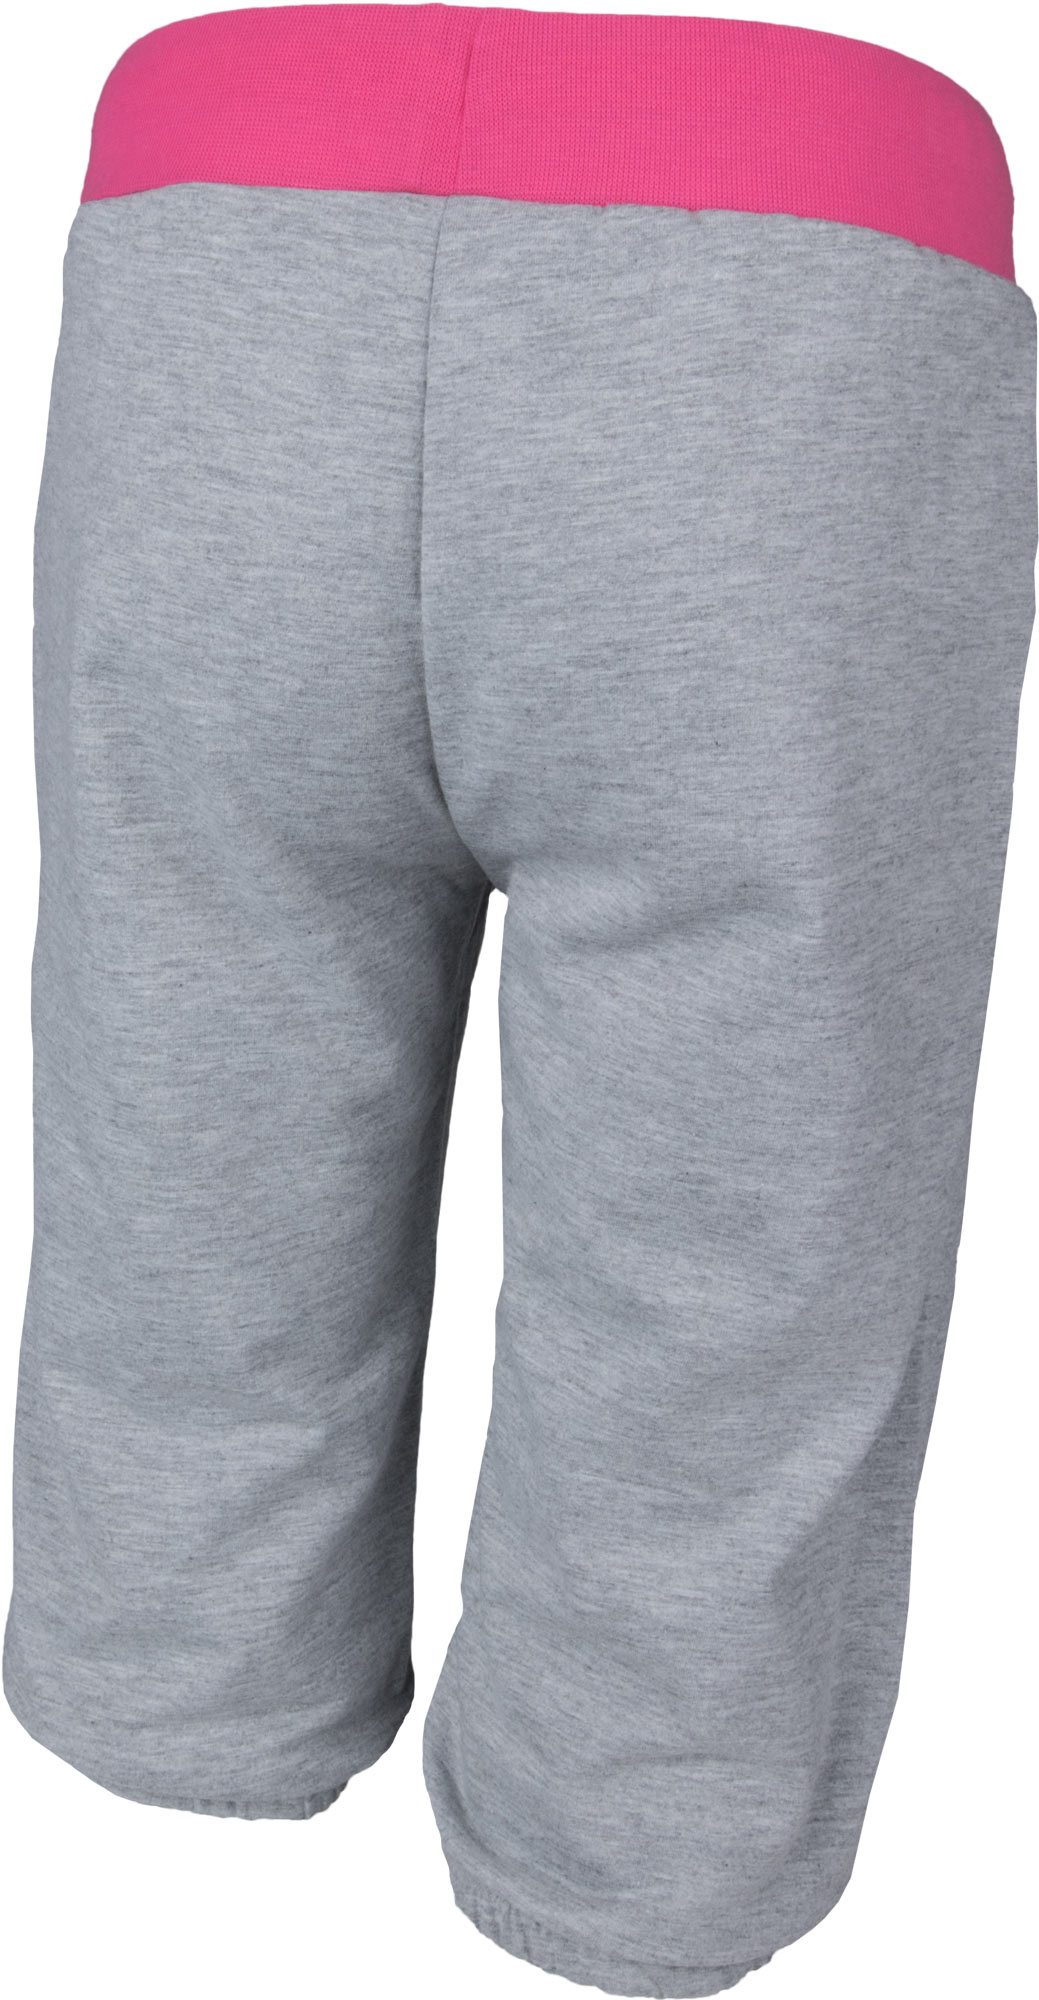 Girls’ 3/4 length sweatpants